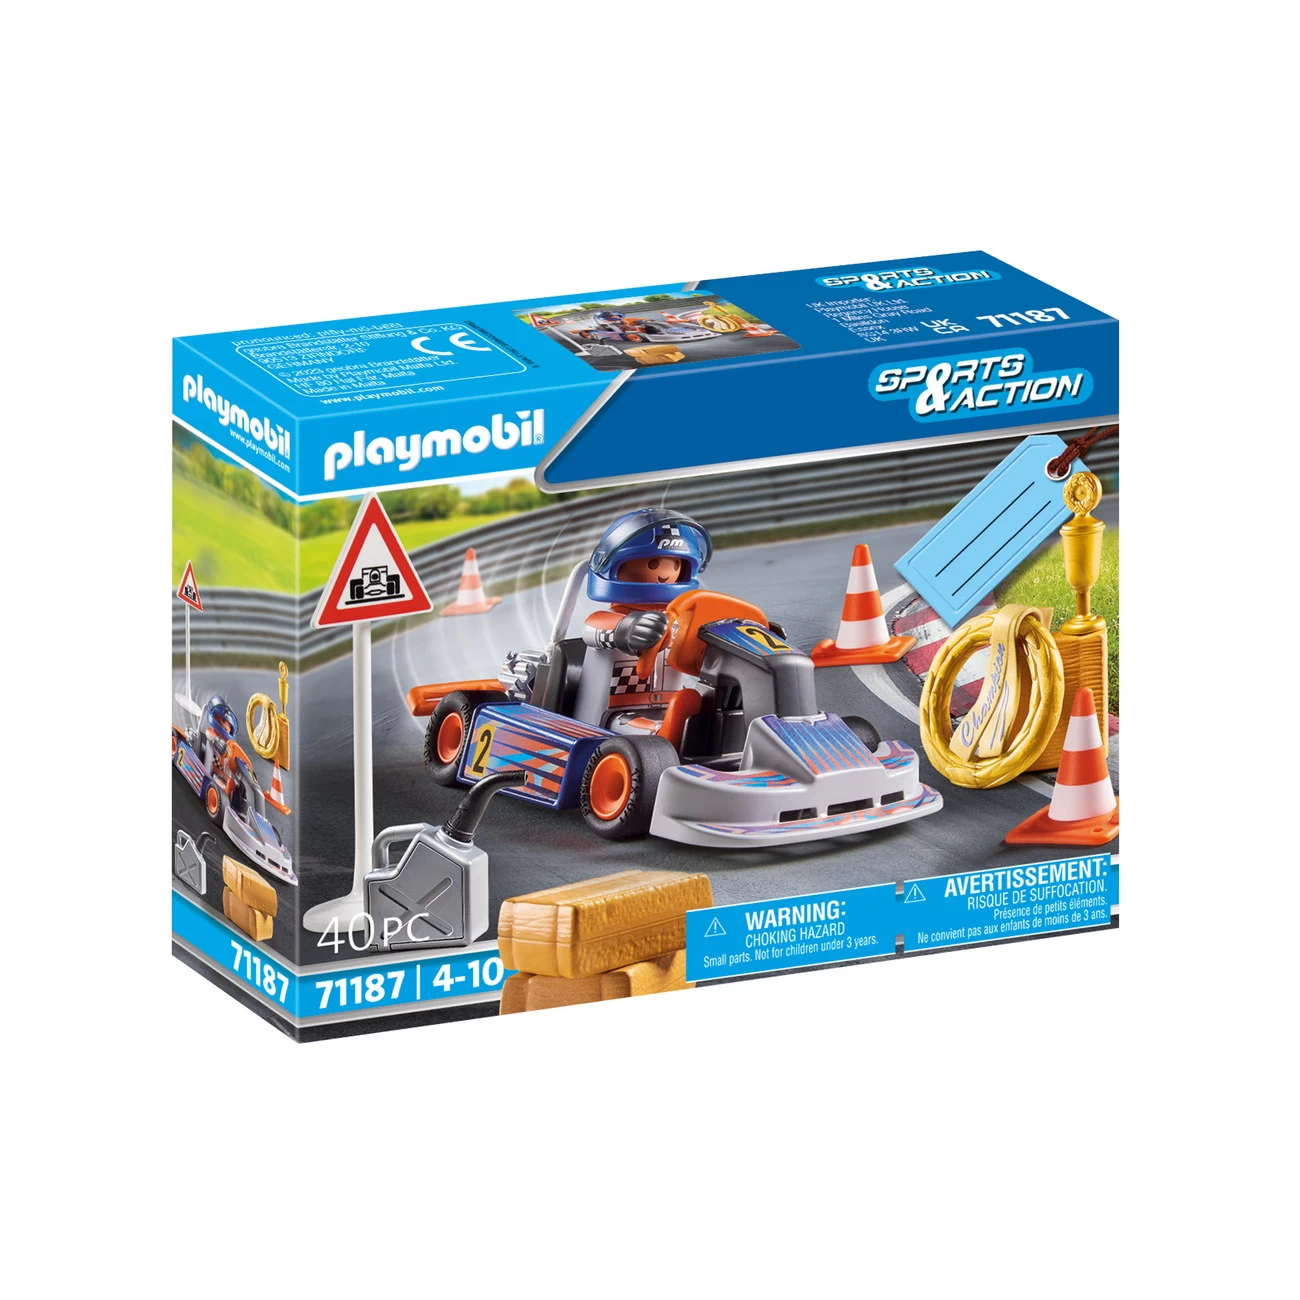 Playmobil 71187 - Racing Kart - Sports und Action